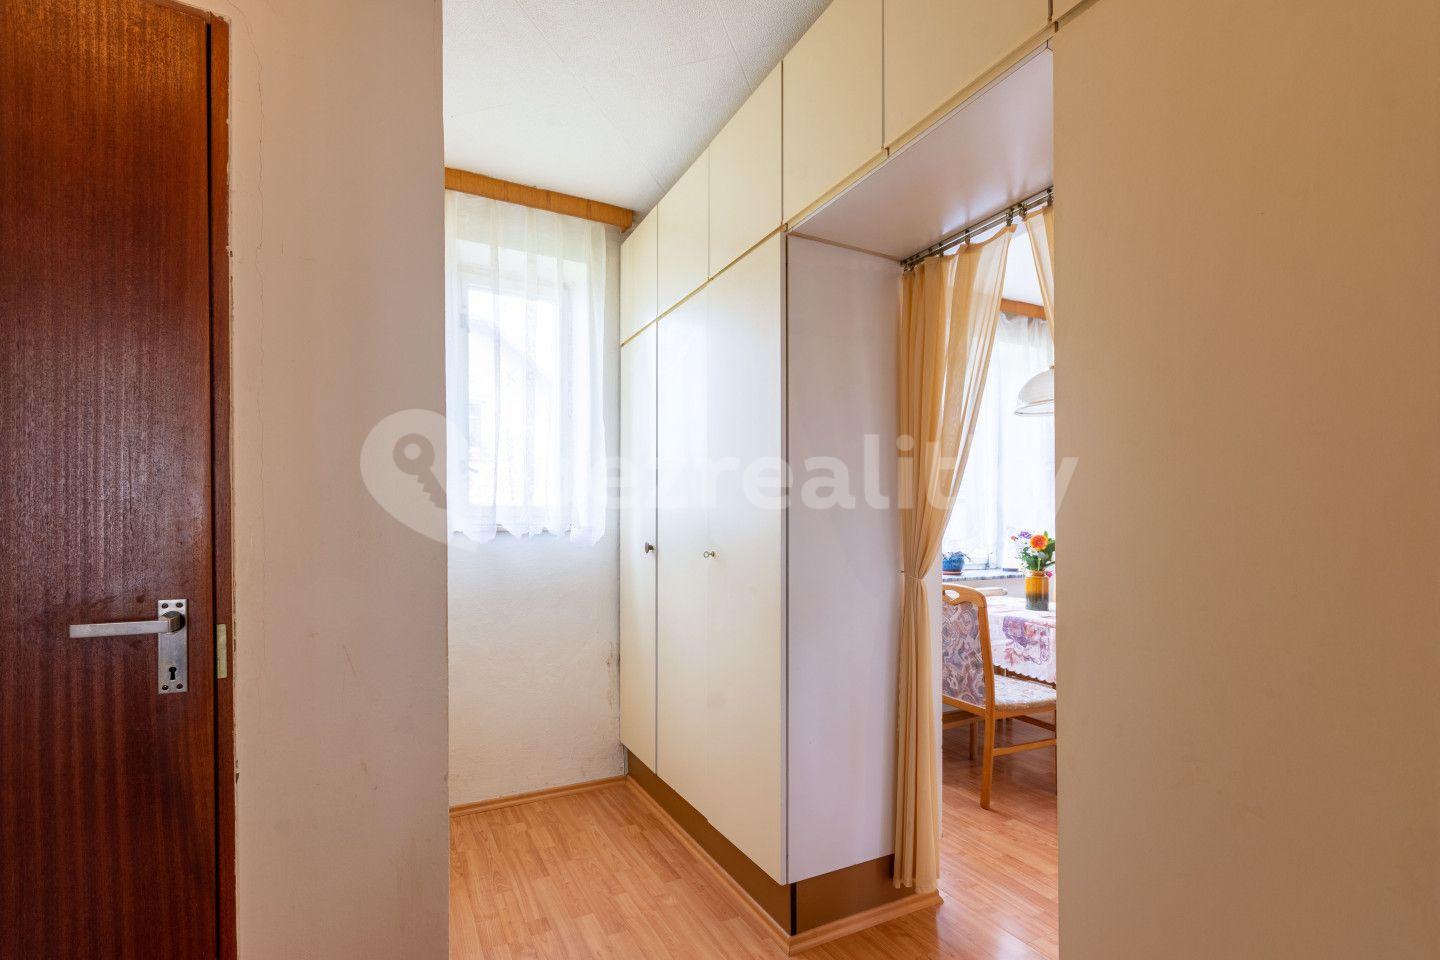 4 bedroom flat for sale, 166 m², Komenského, Rýmařov, Moravskoslezský Region